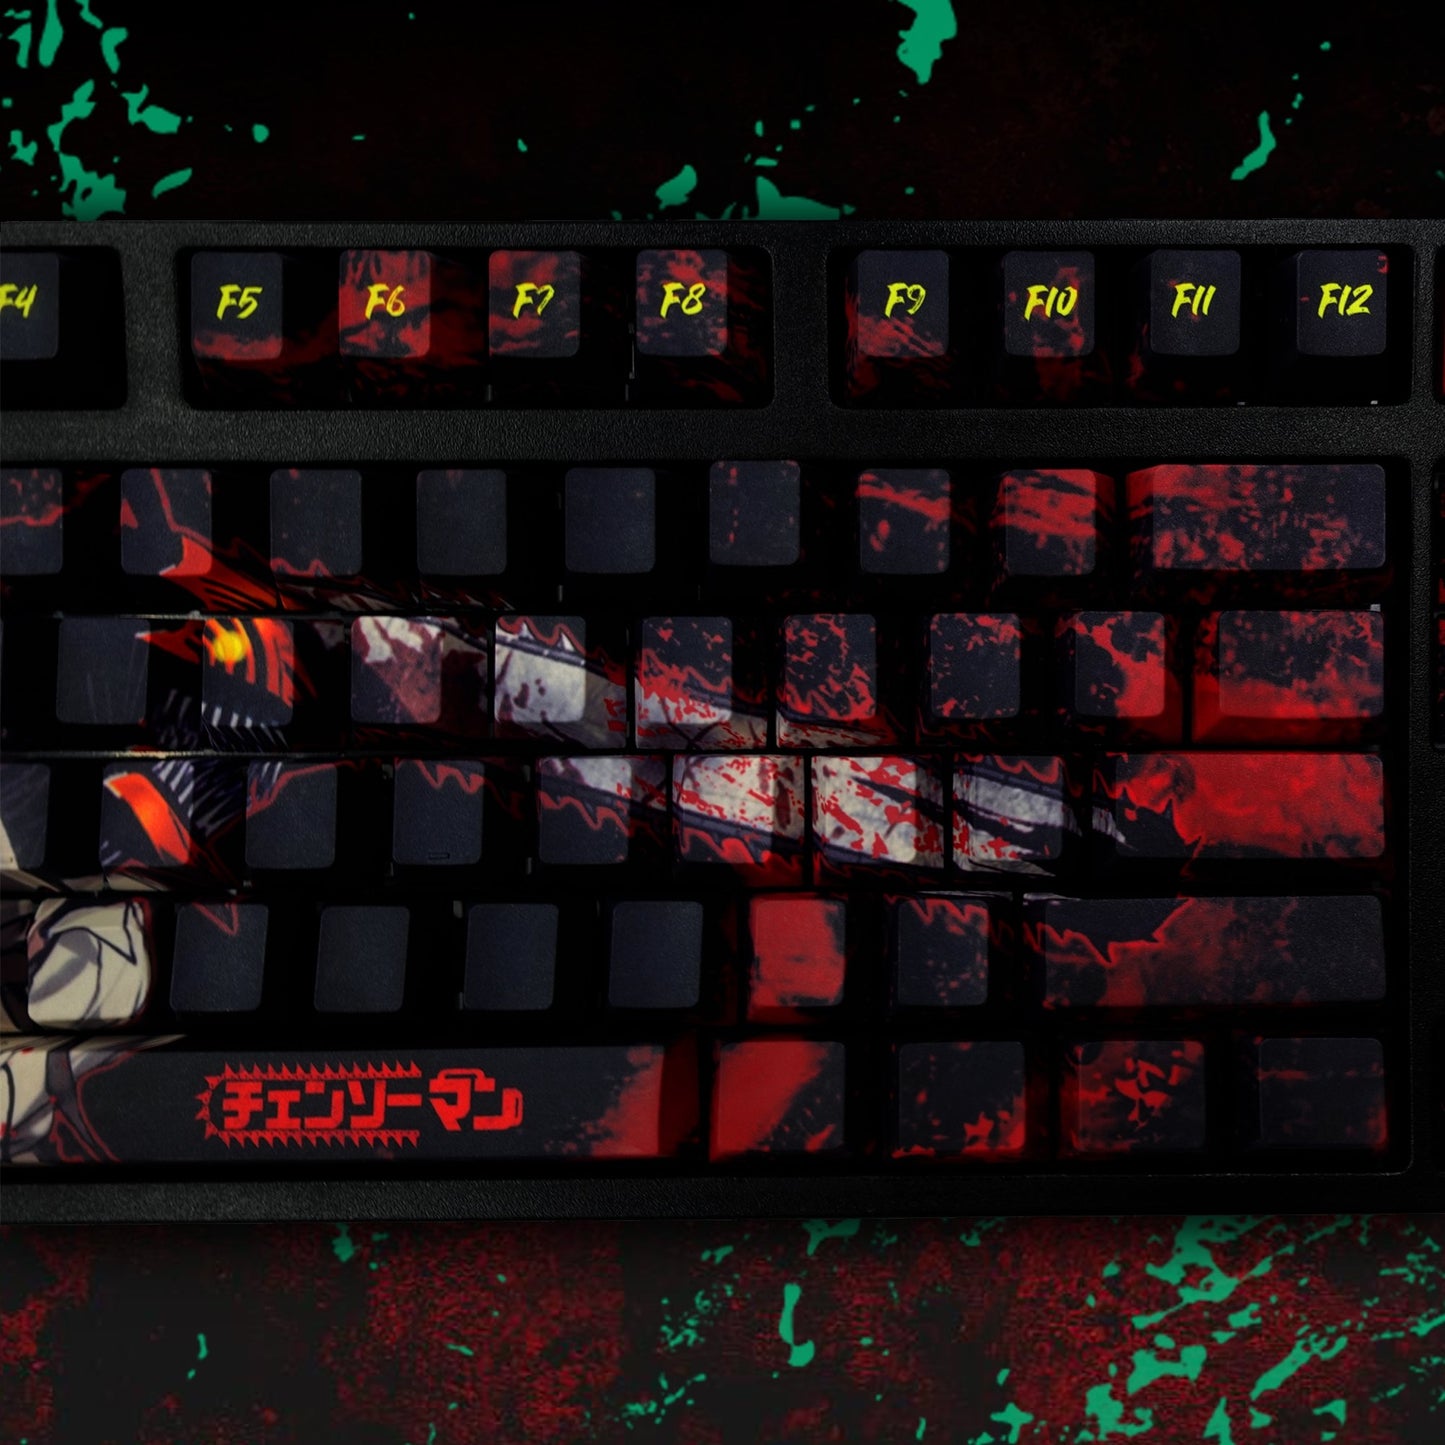 Chainsawman Keycaps | Denji 02 Keycaps - Goblintechkeys